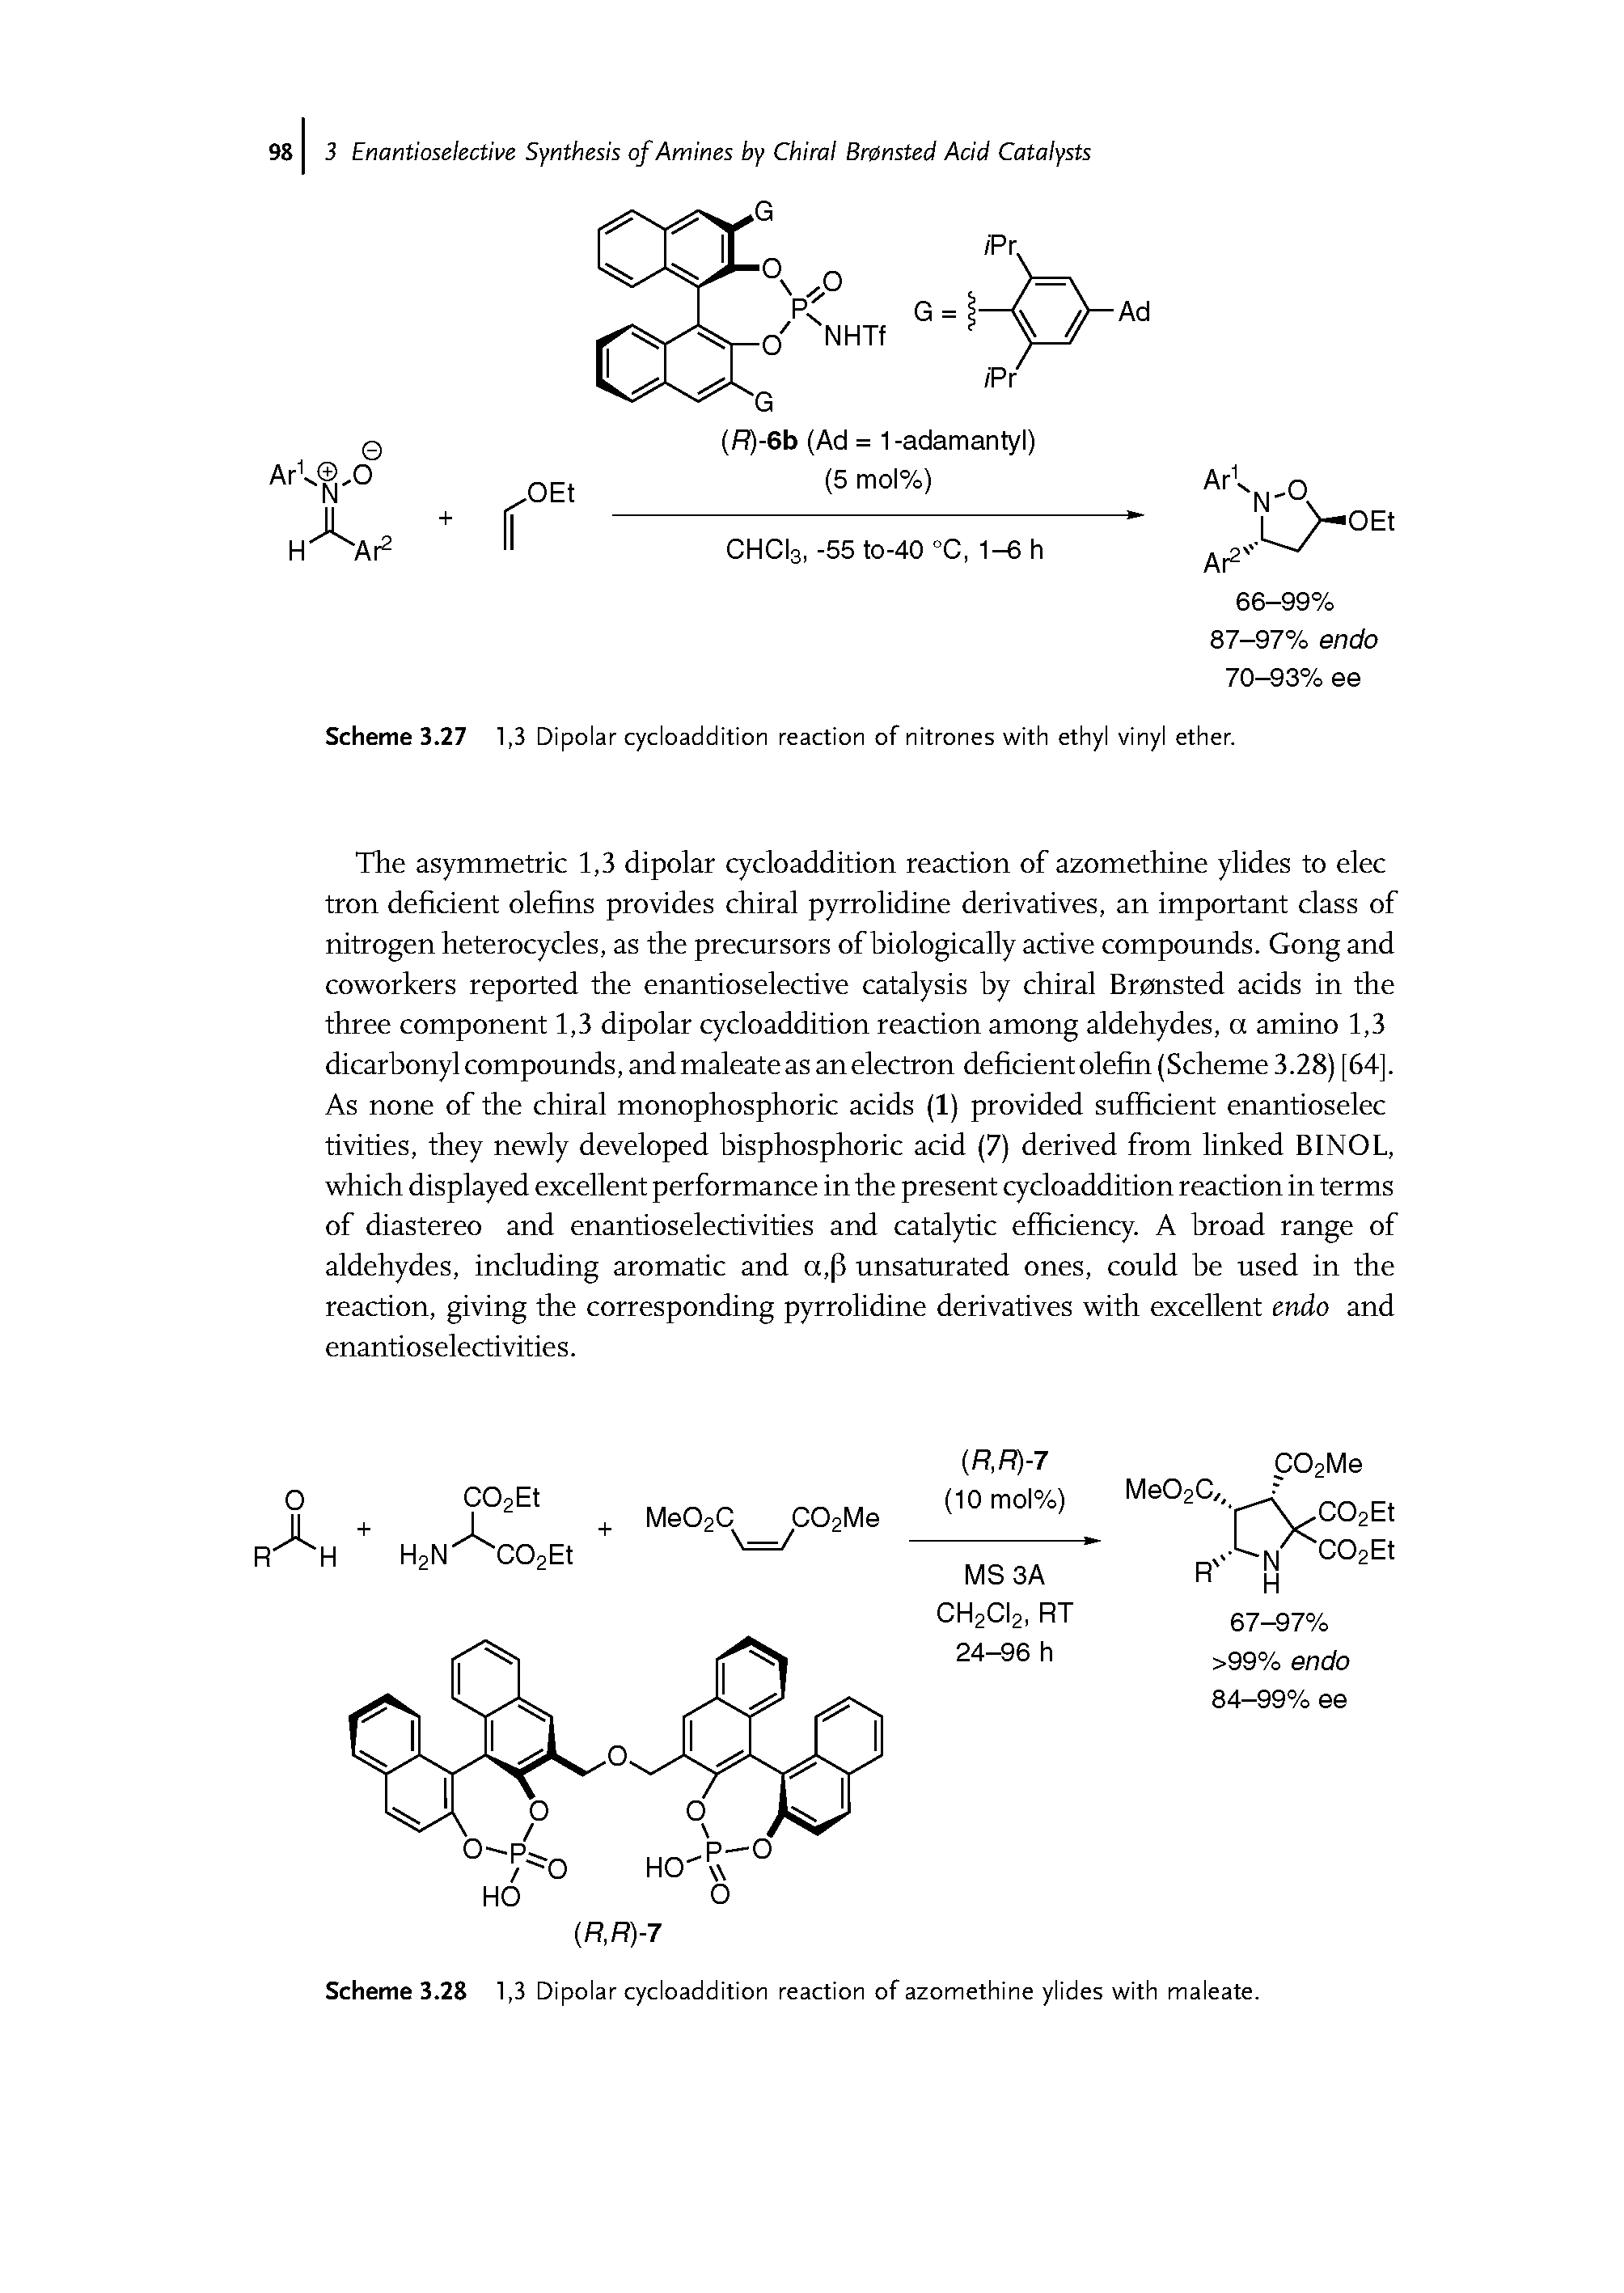 Scheme 3.27 1,3 Dipolar cycloaddition reaction of nitrones with ethyl vinyl ether.